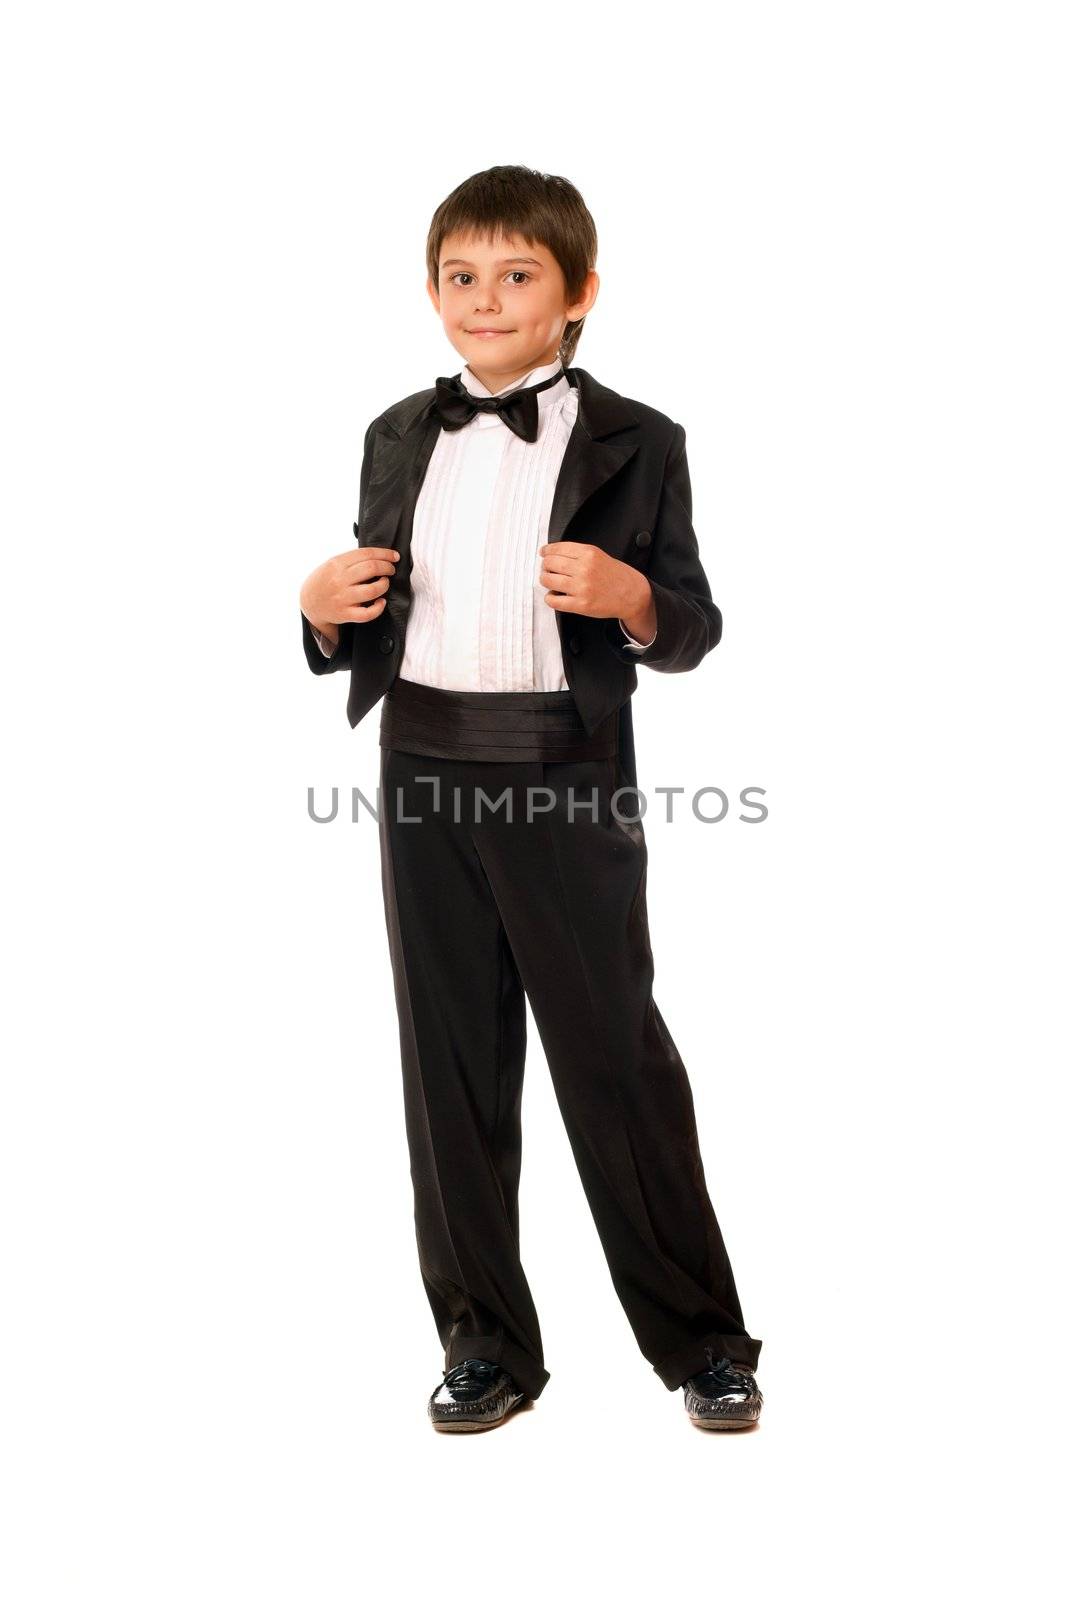 Handsome little boy in a tuxedo by acidgrey